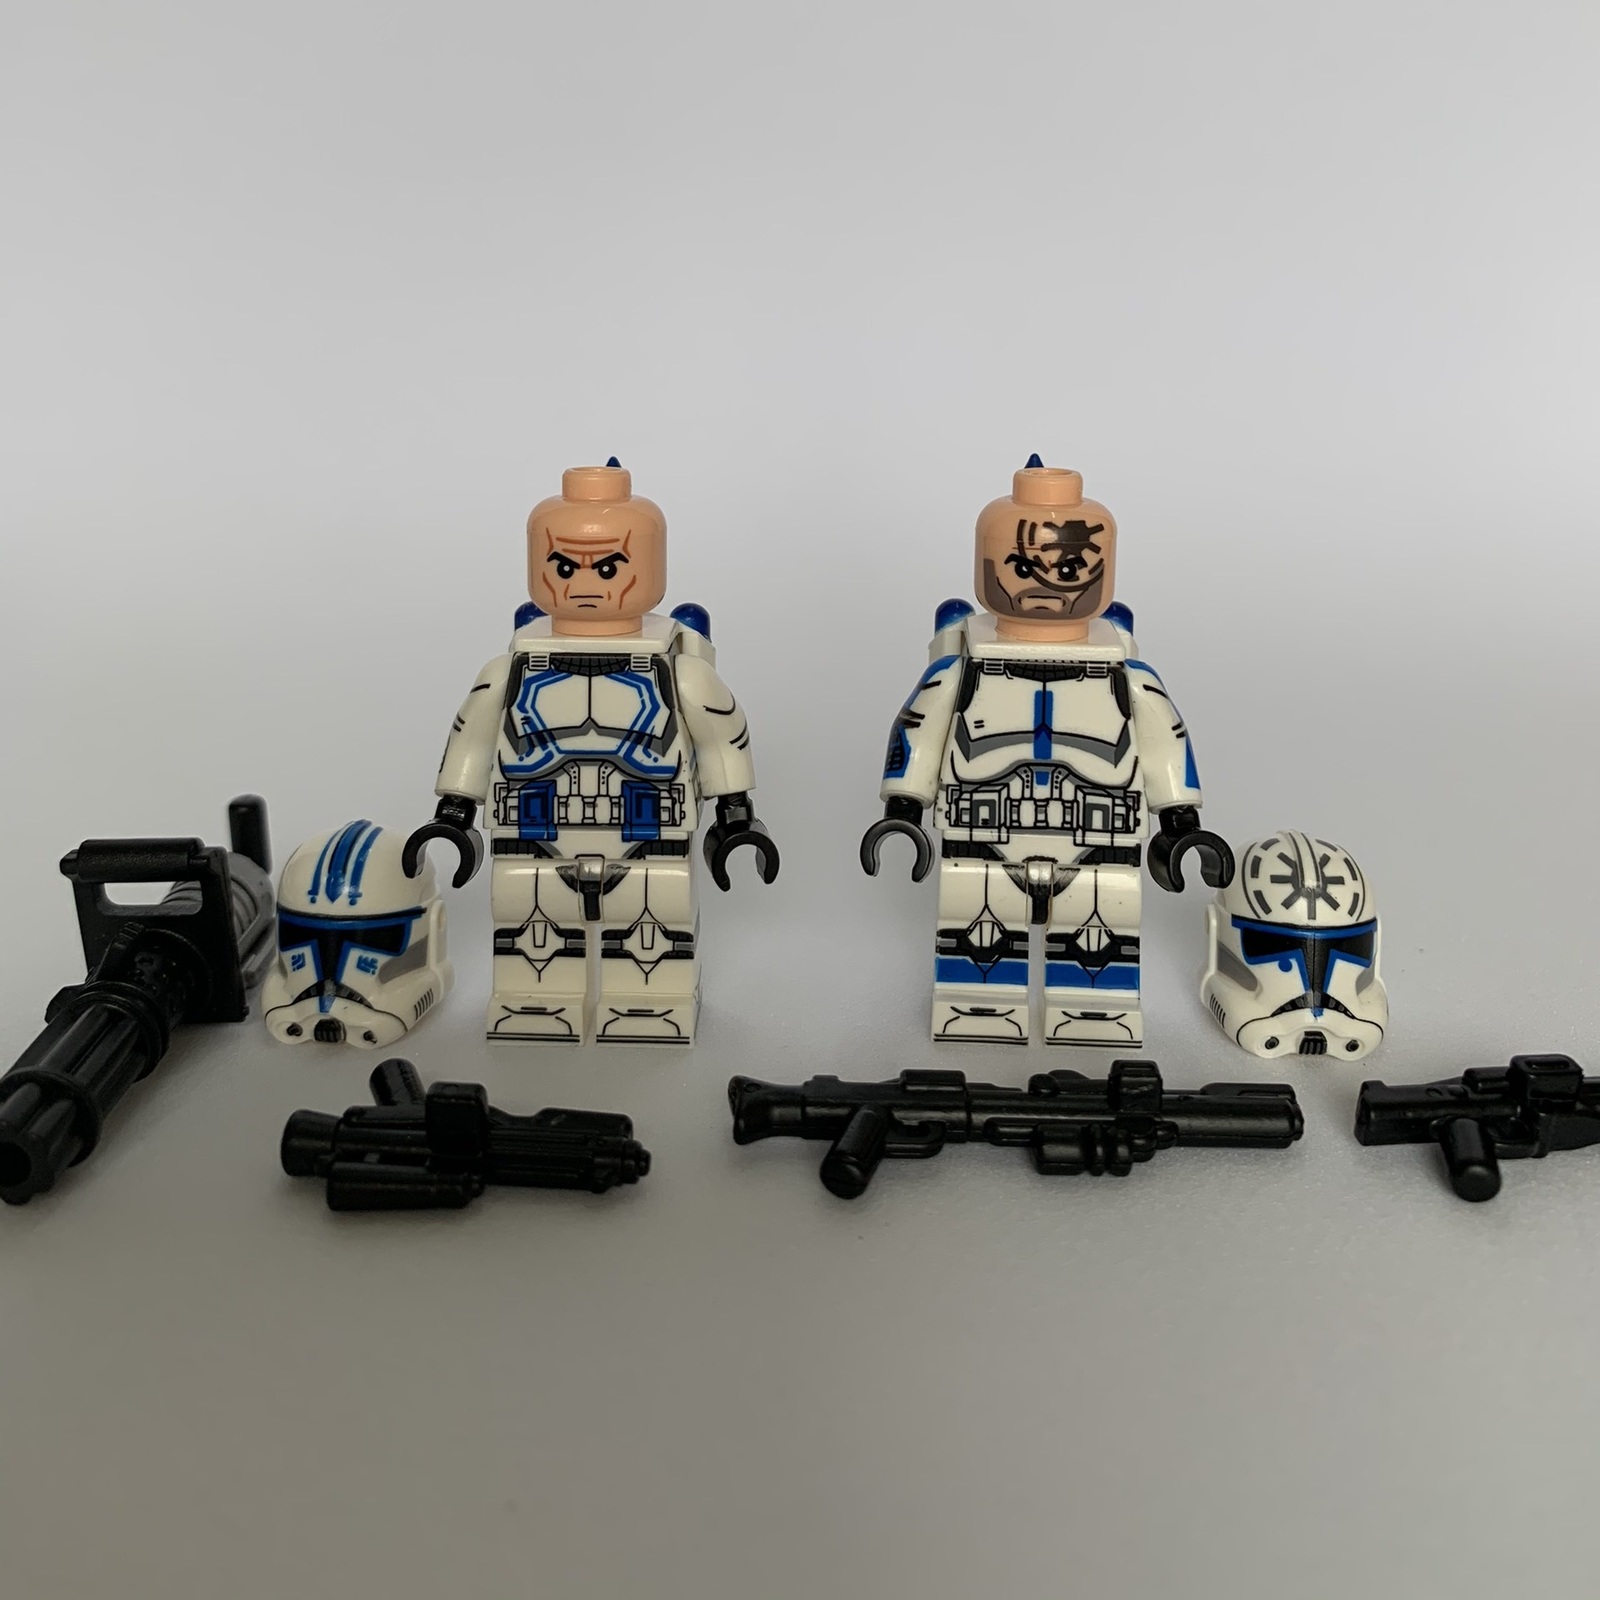 9pcs Star Wars 501st Legion Rex Appo Echo Hardcase Clone Troopers Minifigures Building Toy 